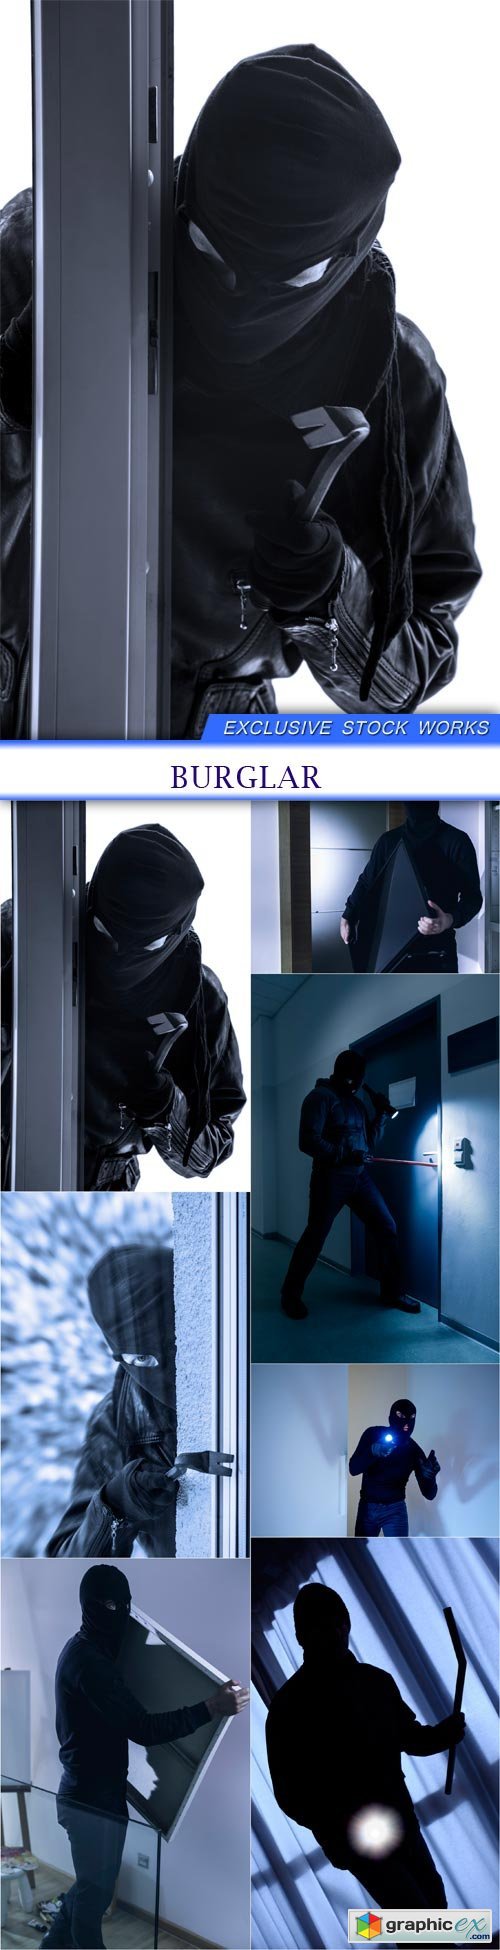 burglar 7X JPEG